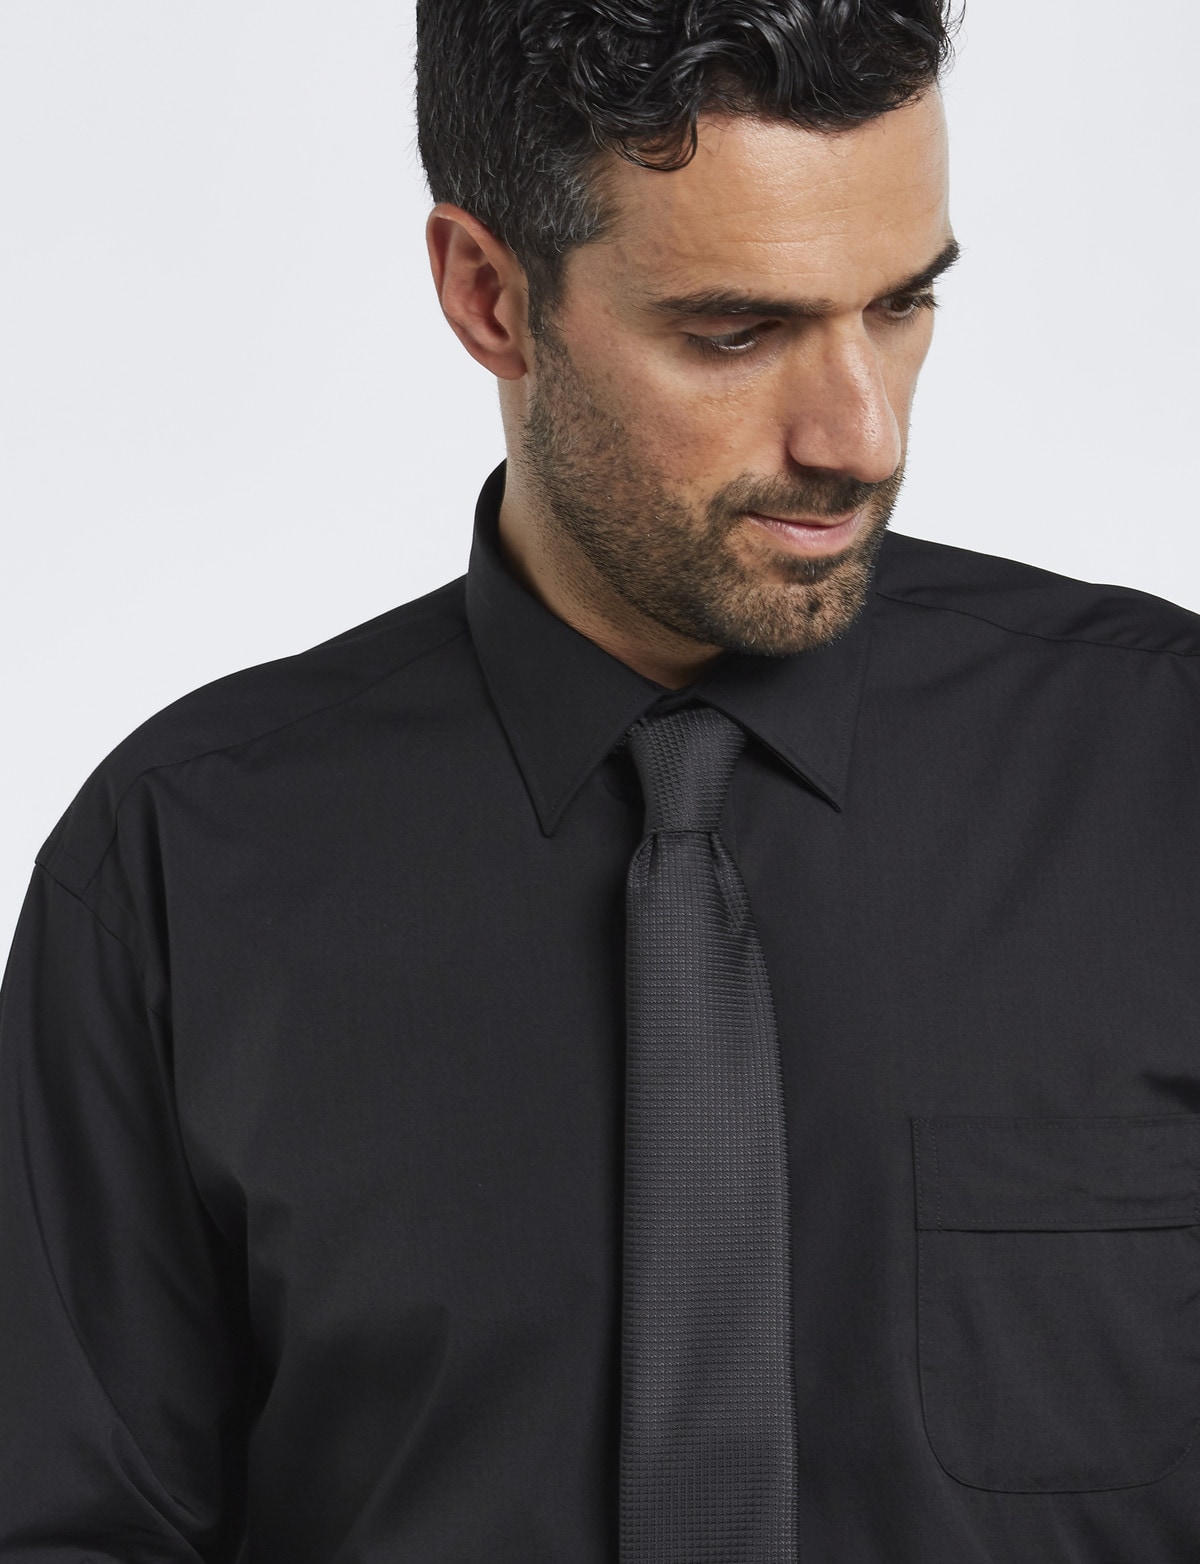 Van Heusen Long-Sleeve Poplin Shirt, Classic Fit, Black - Formal Shirts